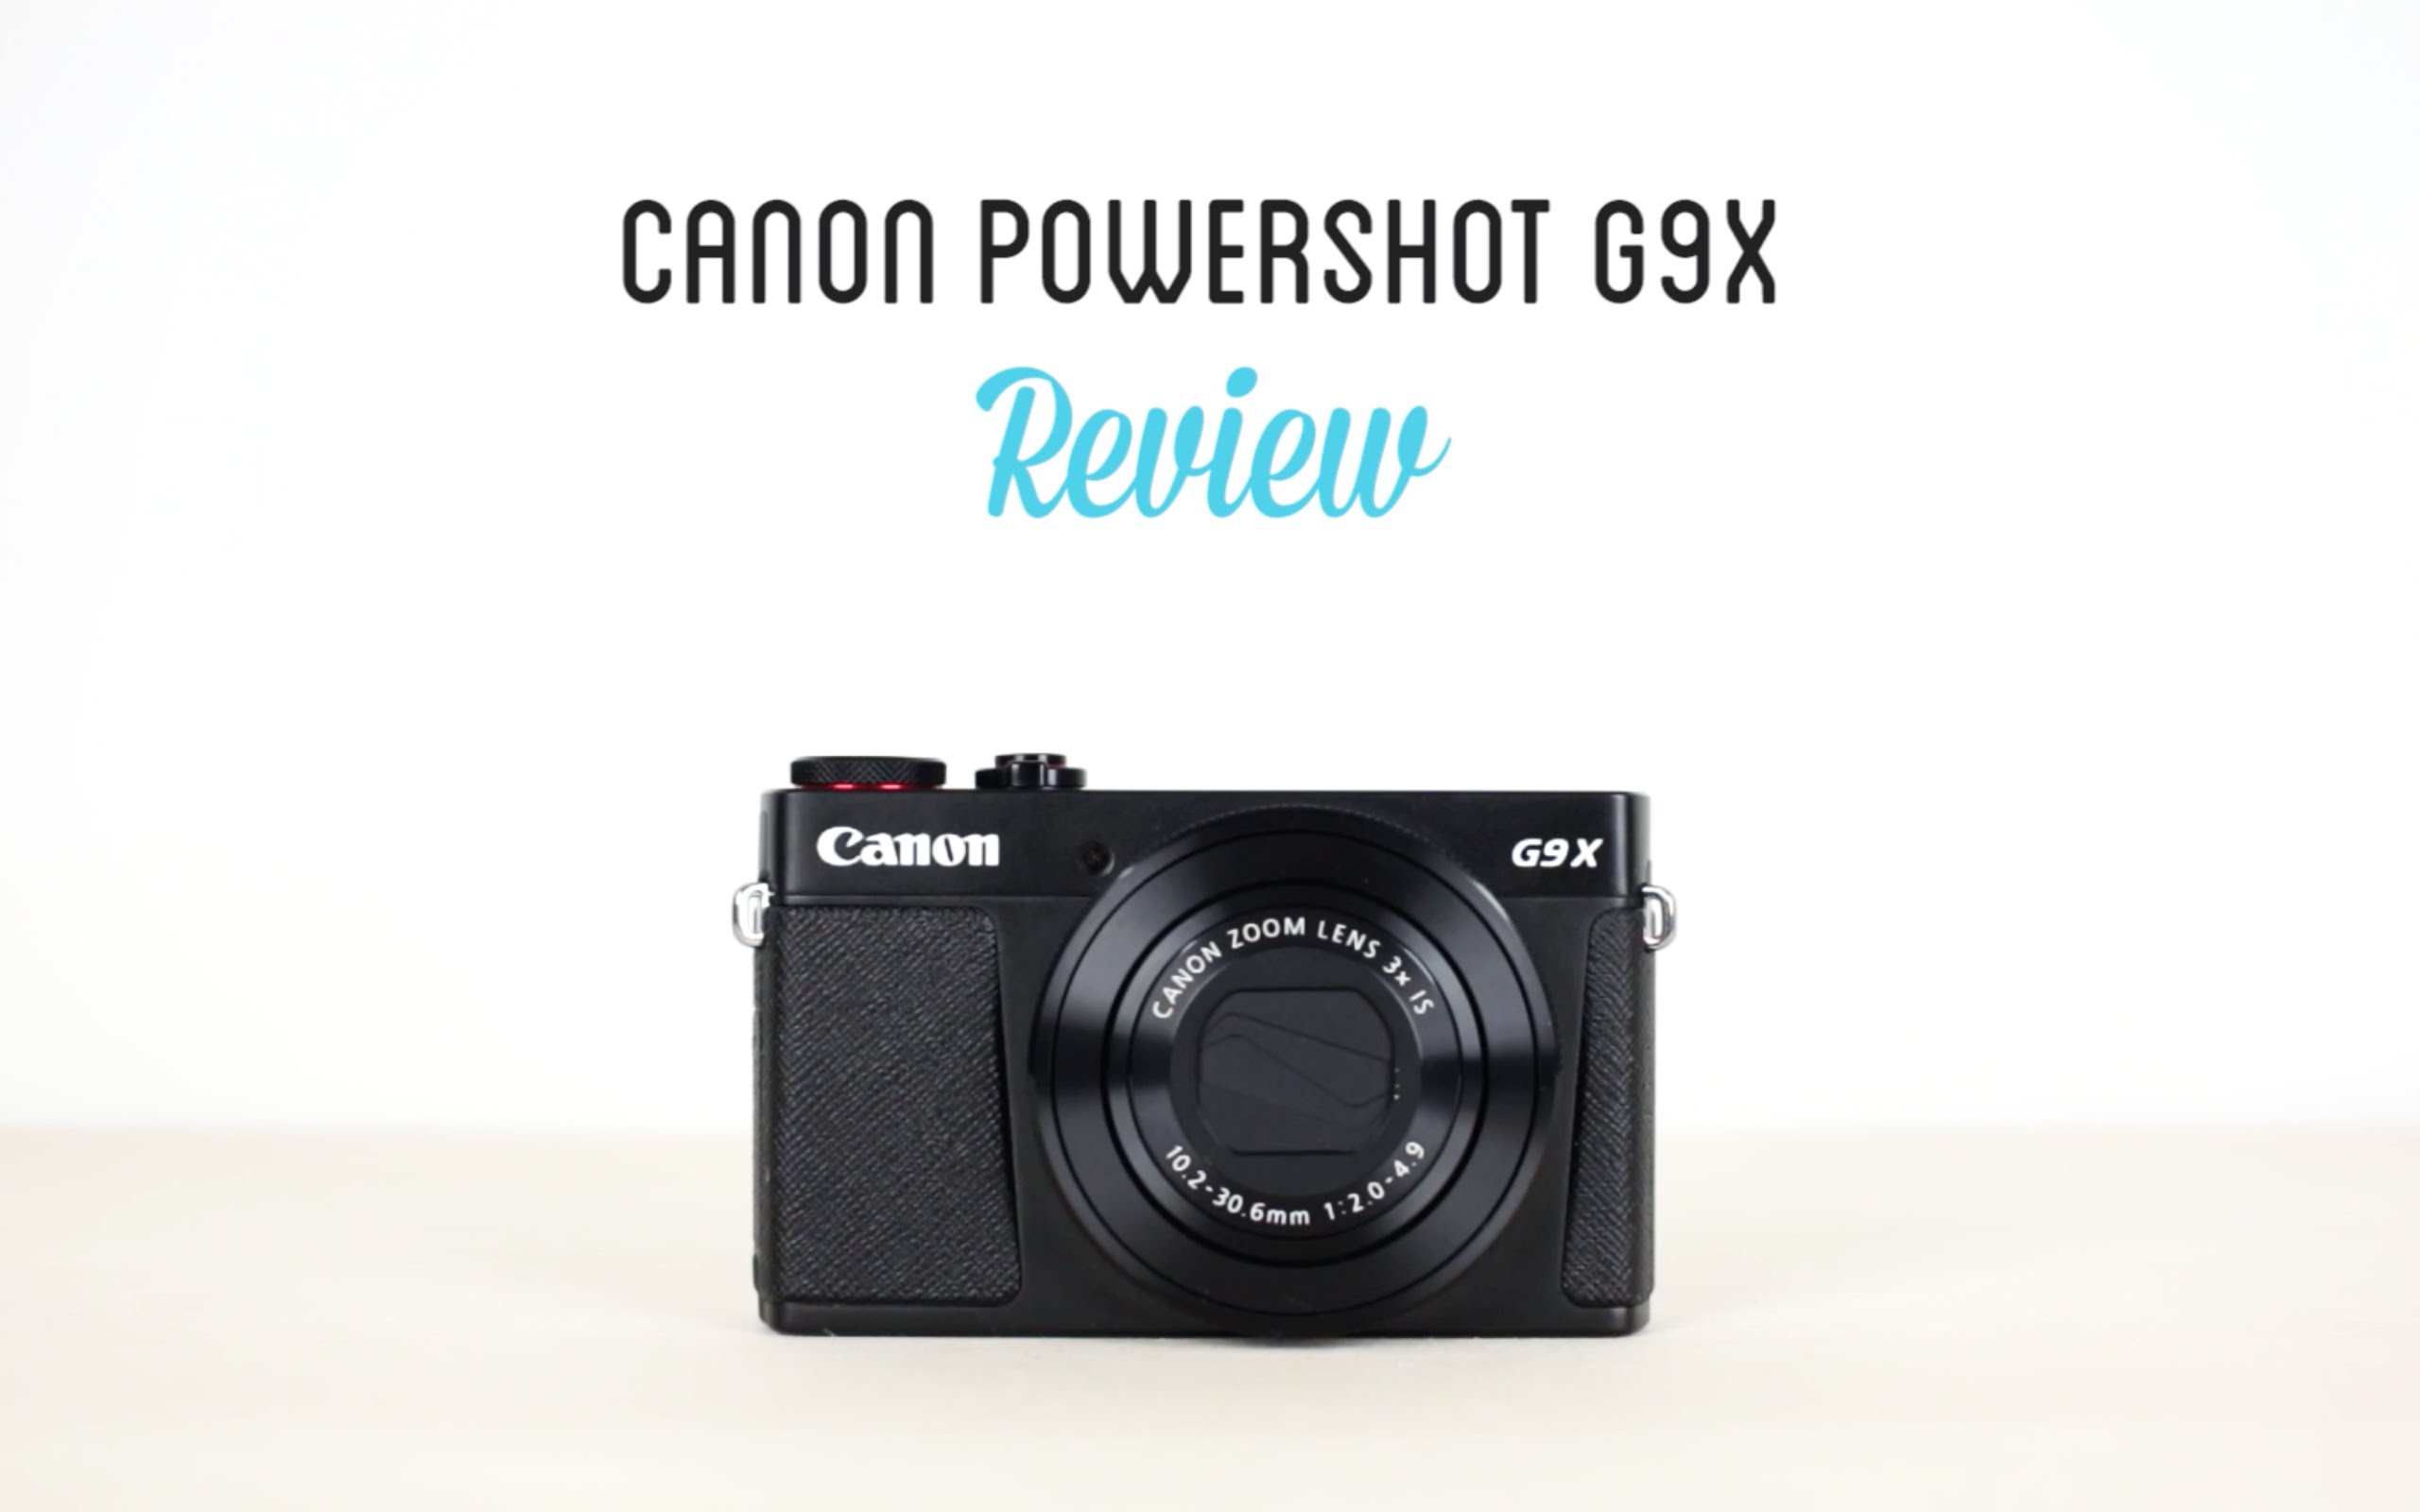 Canon PowerShot G9X Review